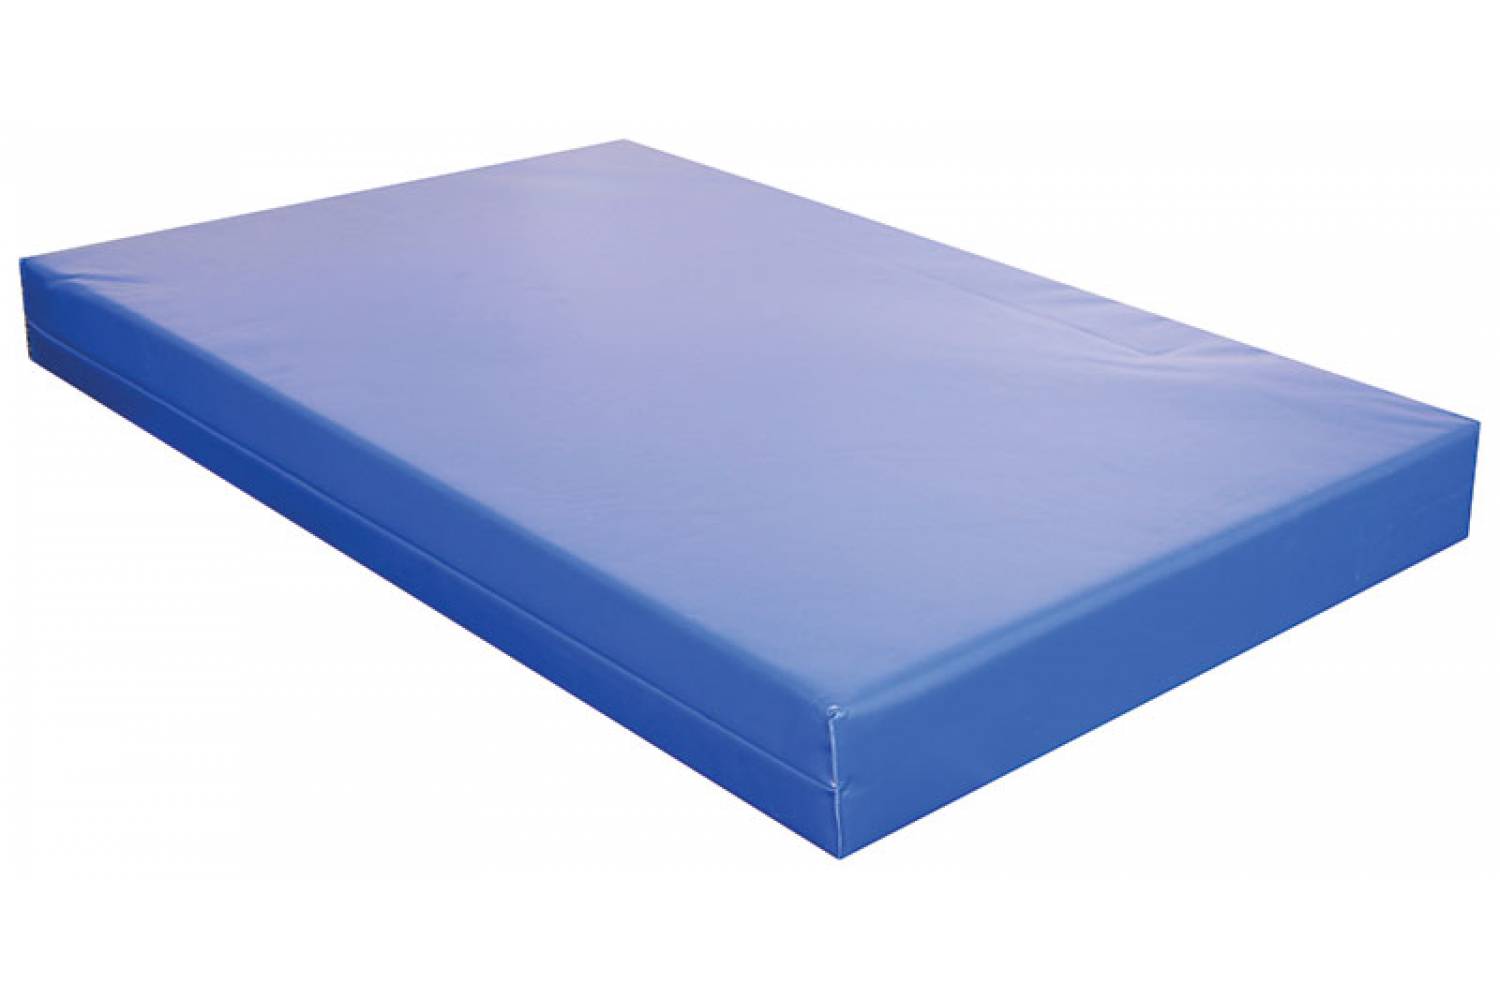 waterproof cot mattress cover 120 x 60